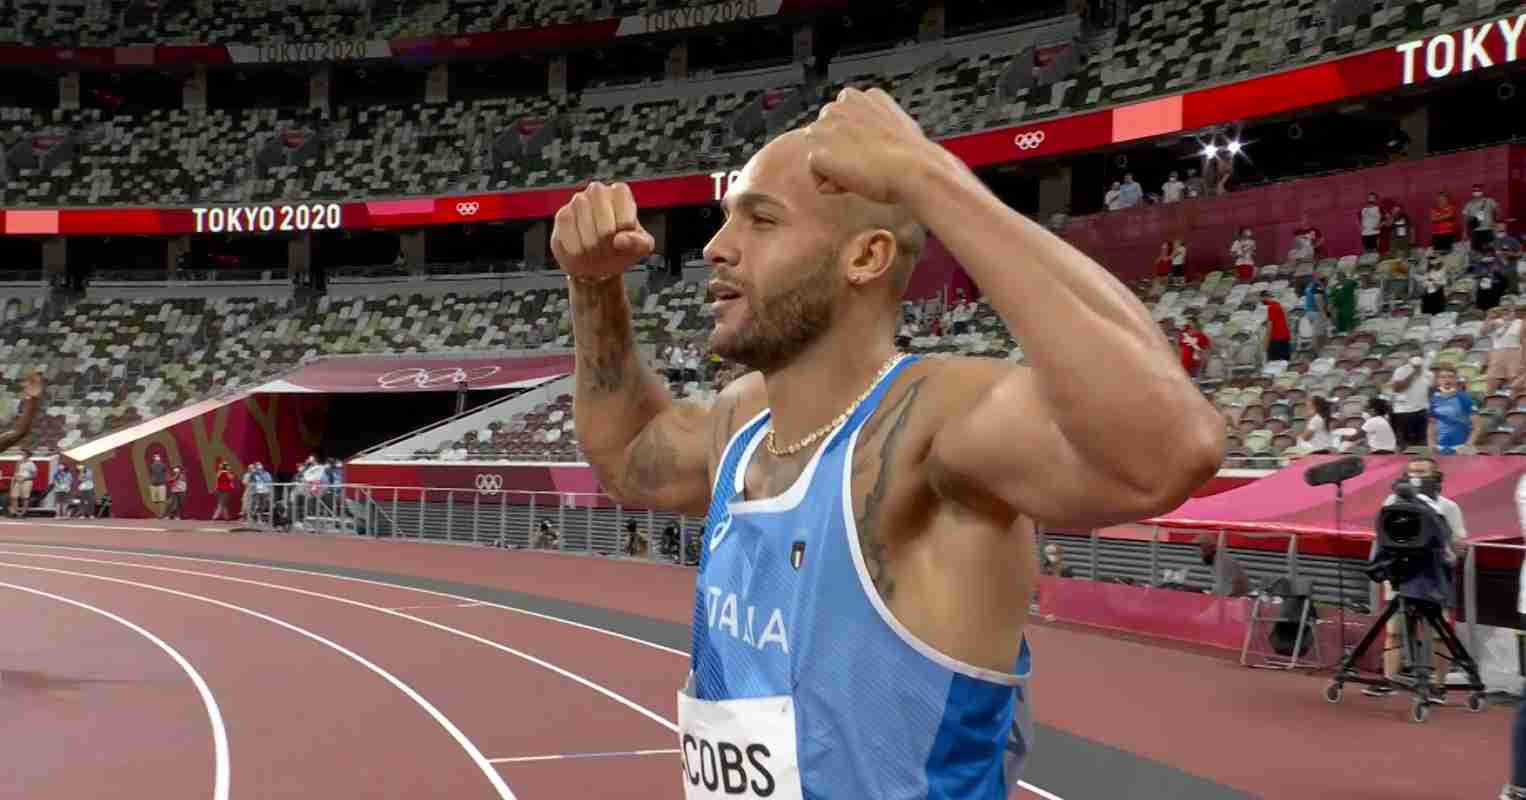 Lamont Marcell Jacobs celebrates winning Tokyo 2020 men's 100m